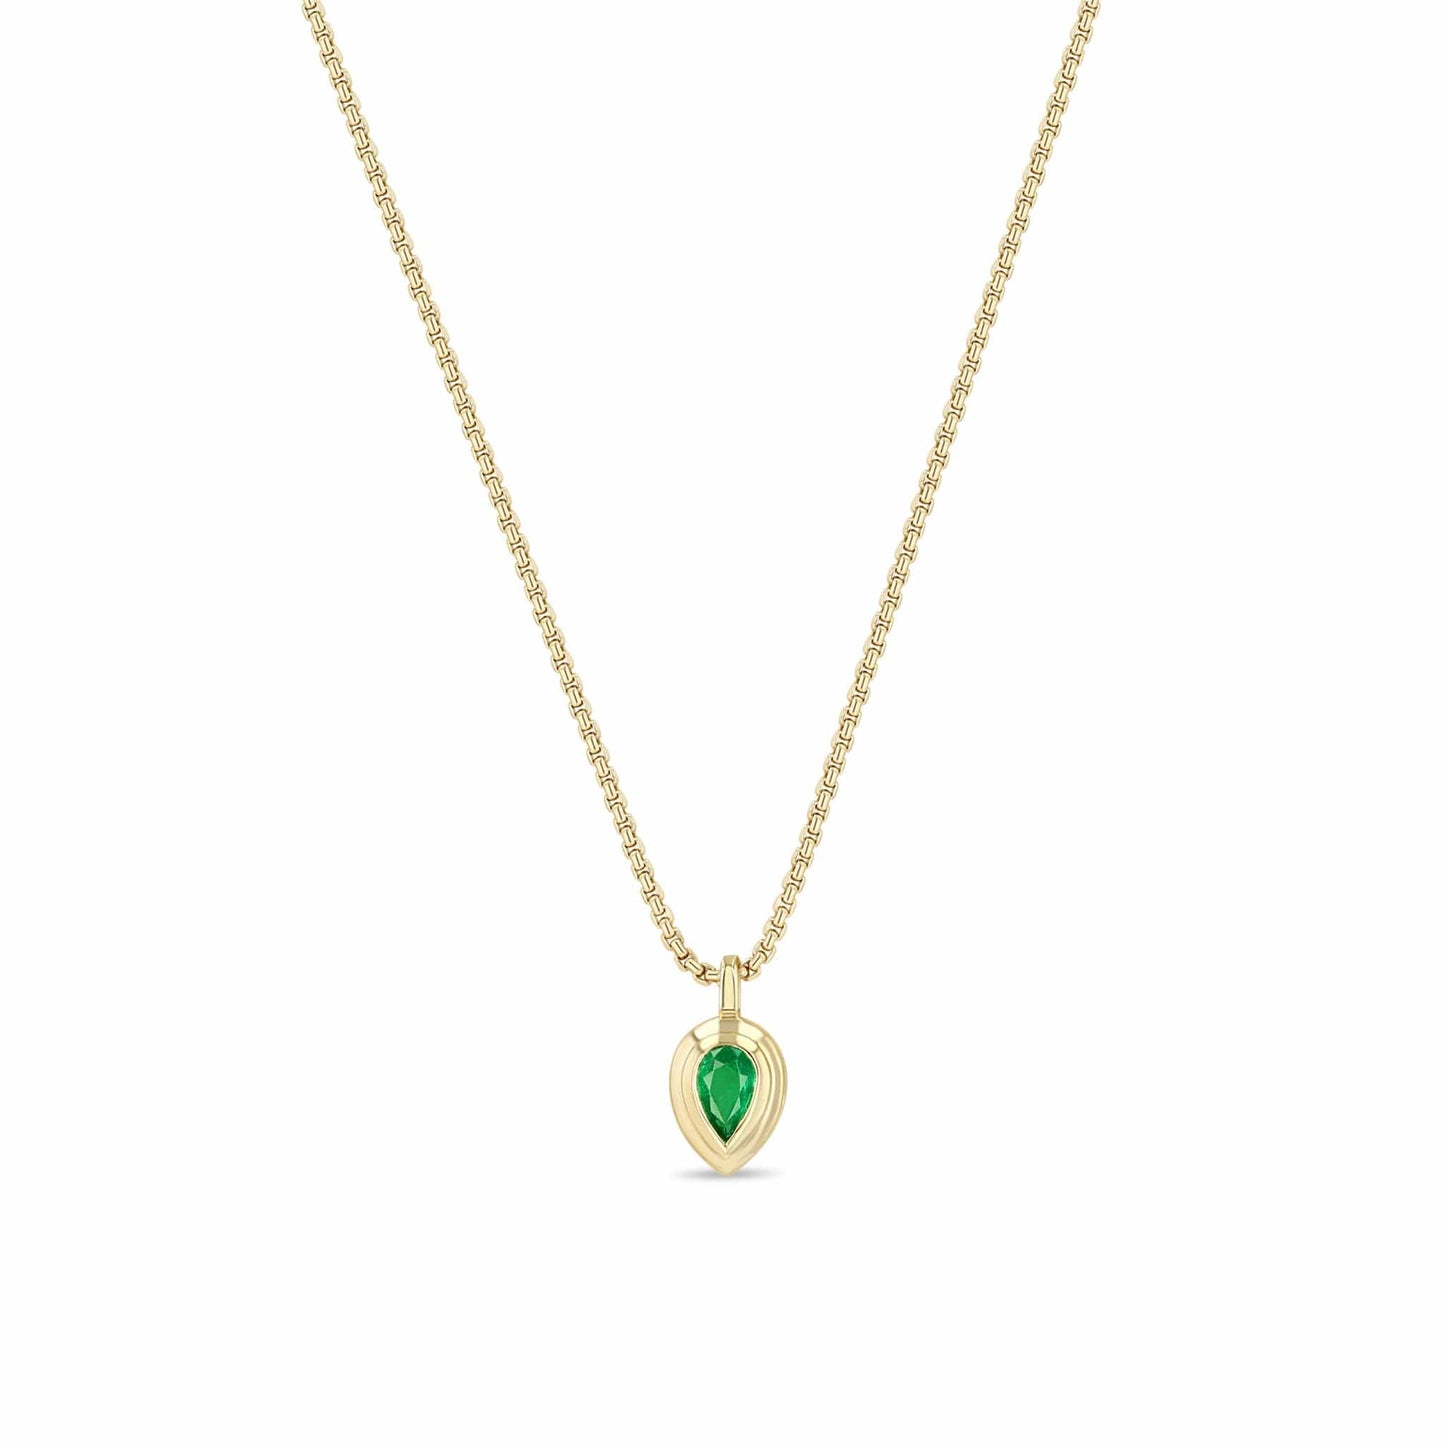 NKL-14K Bezel Set Pear Emerald Pendant Necklace